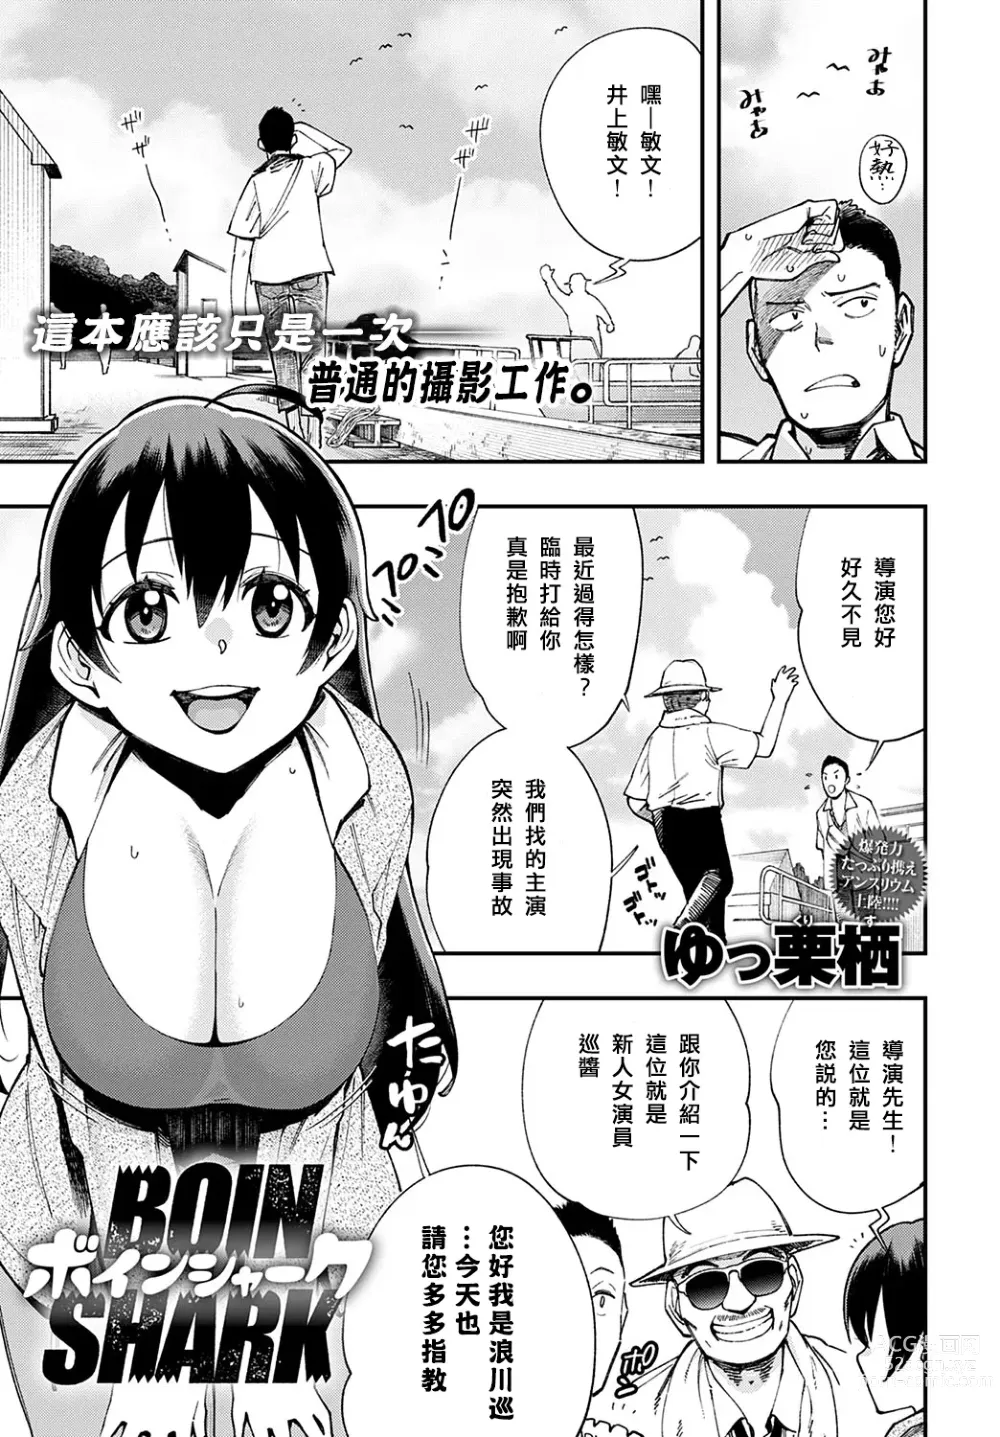 Page 1 of manga Boin Shark